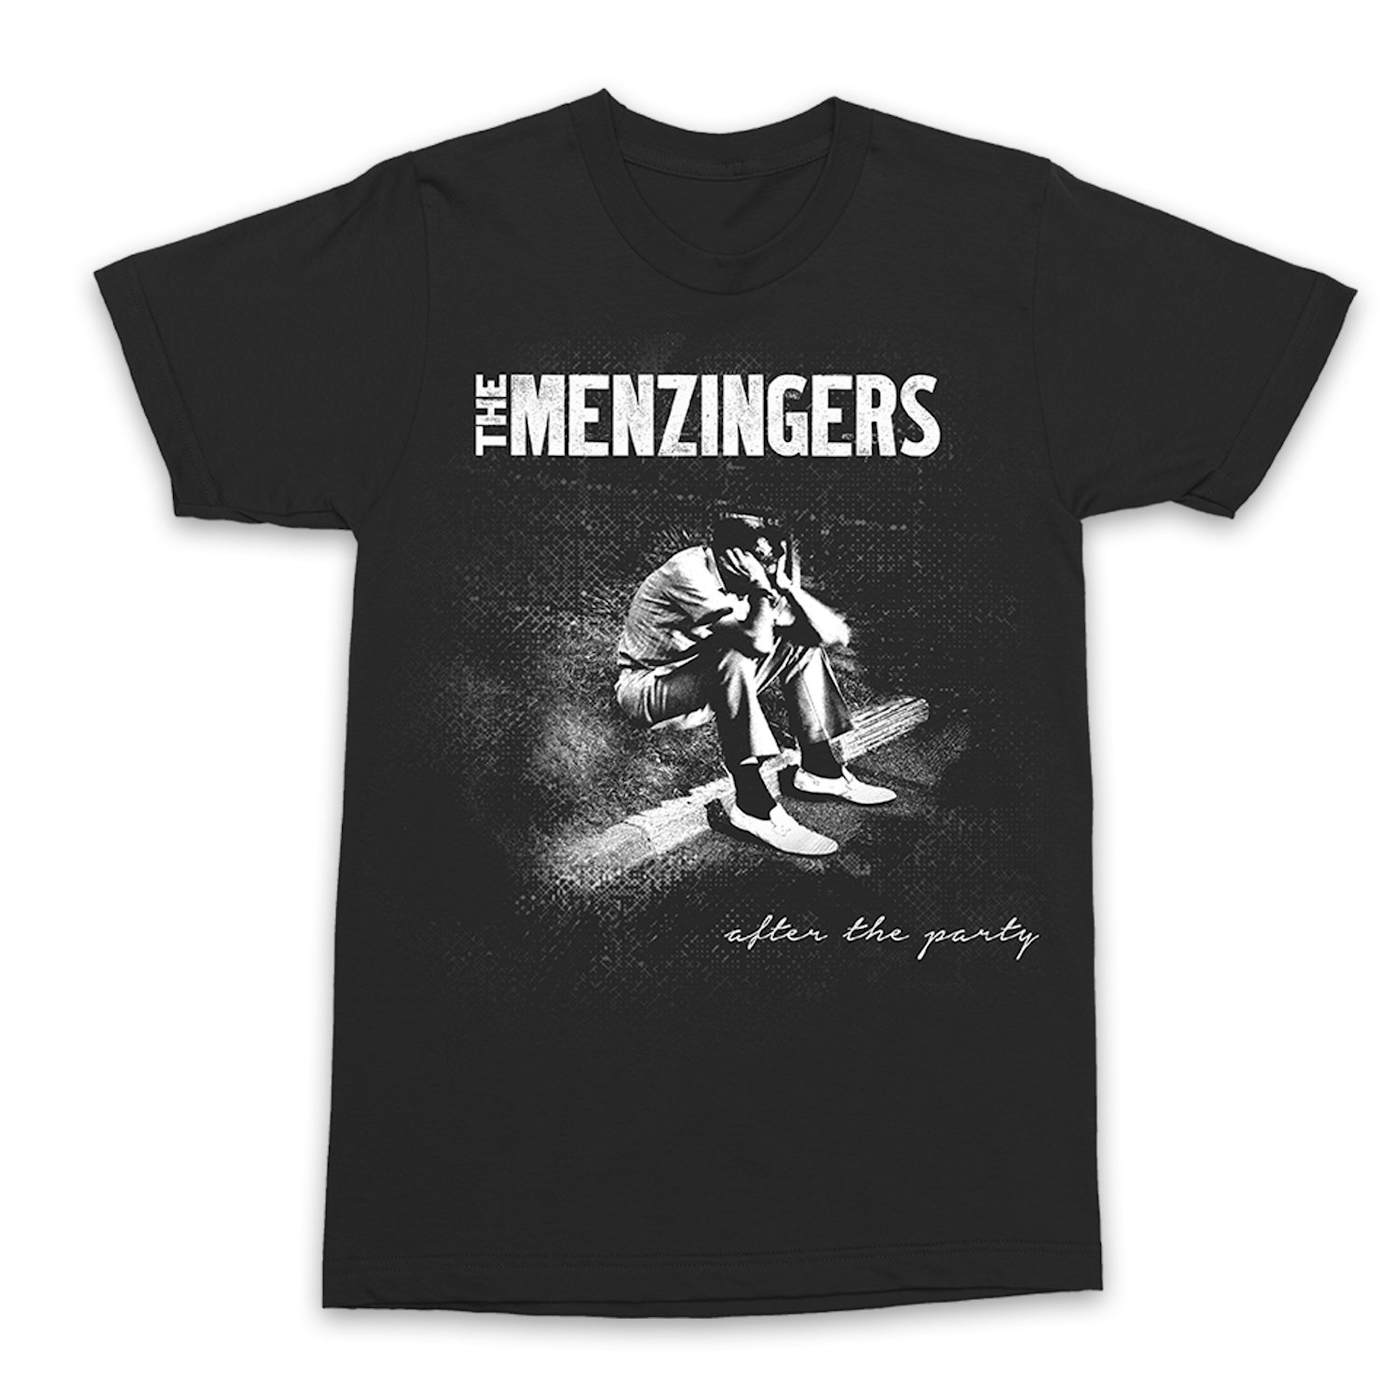 The Menzingers Sad Guy T-Shirt (Black)